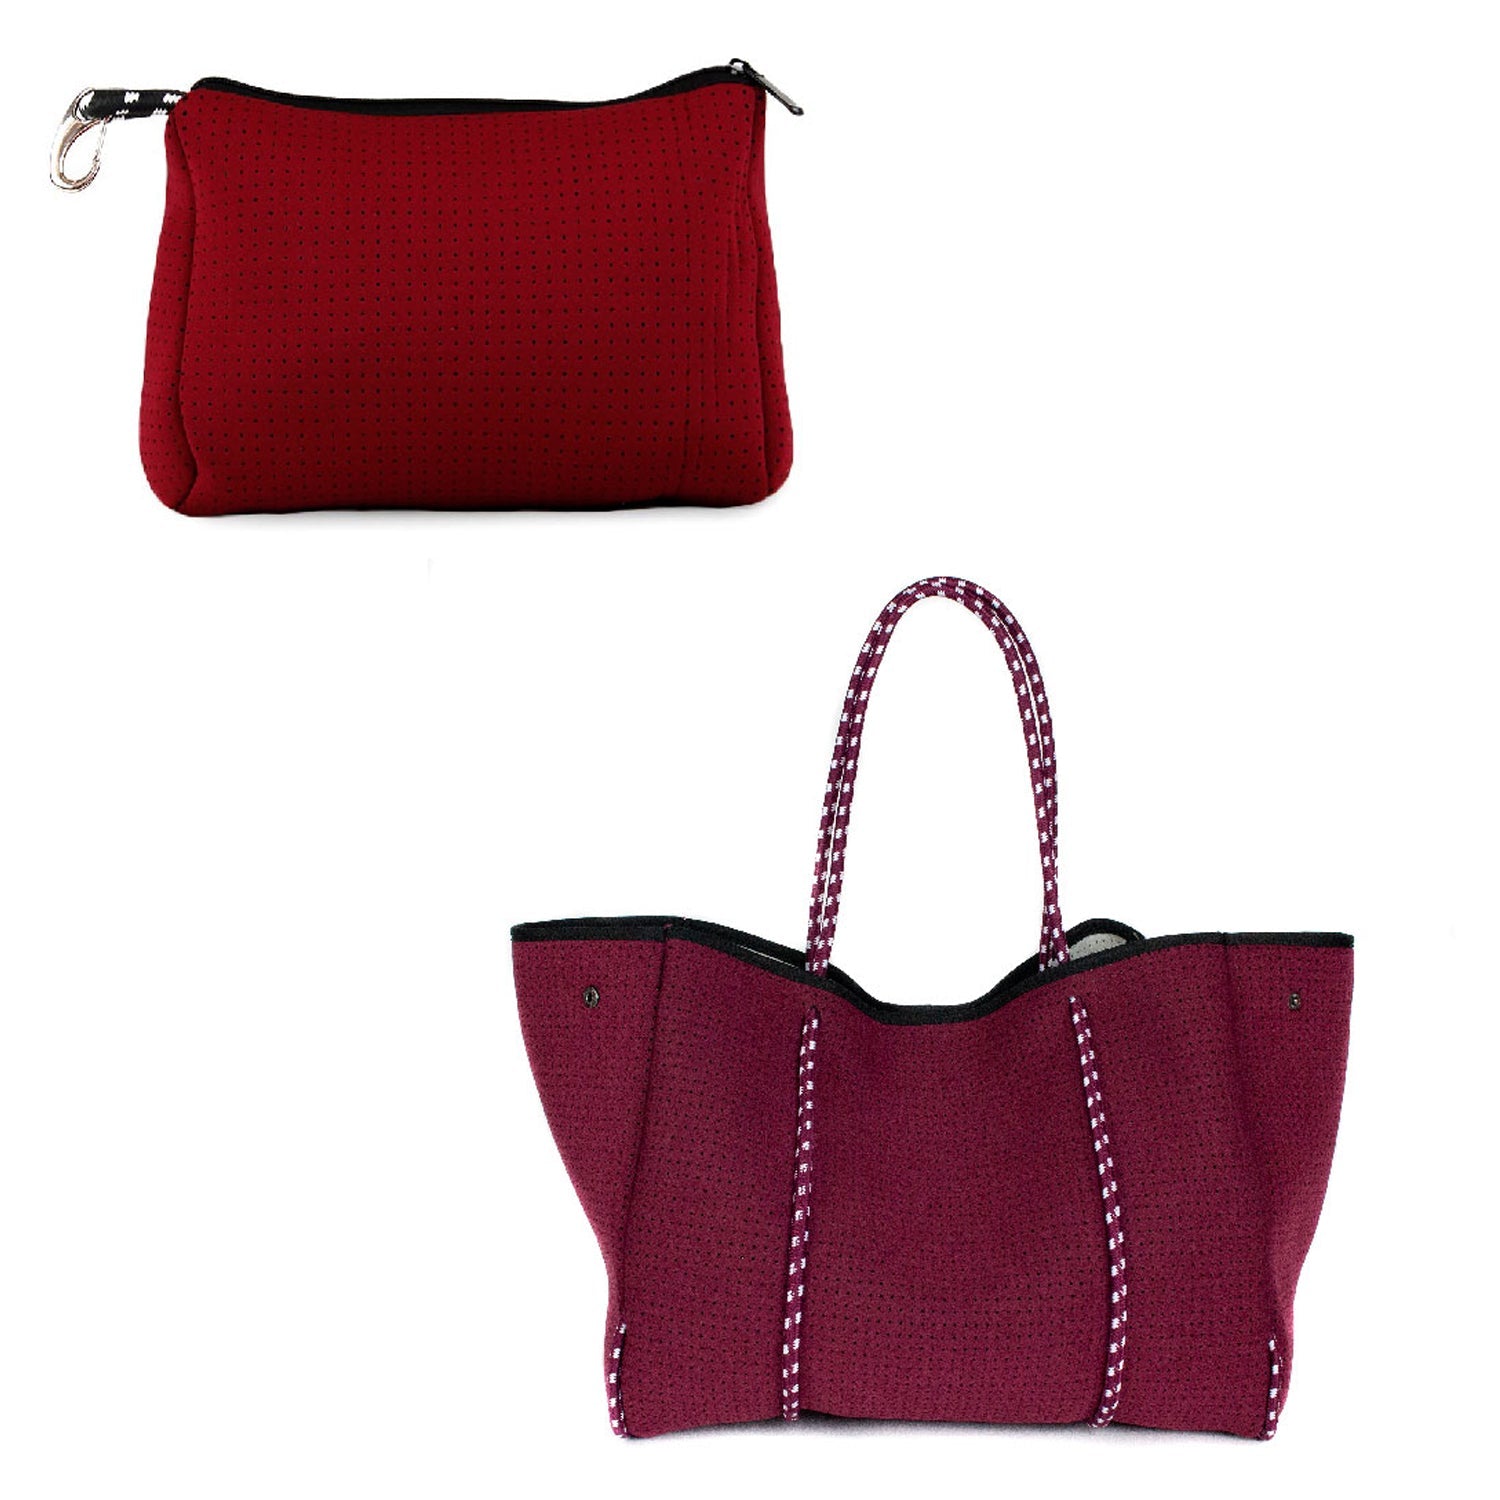 Bag Lv - Shoulder Bags - Aliexpress - Avail bag lv at great price